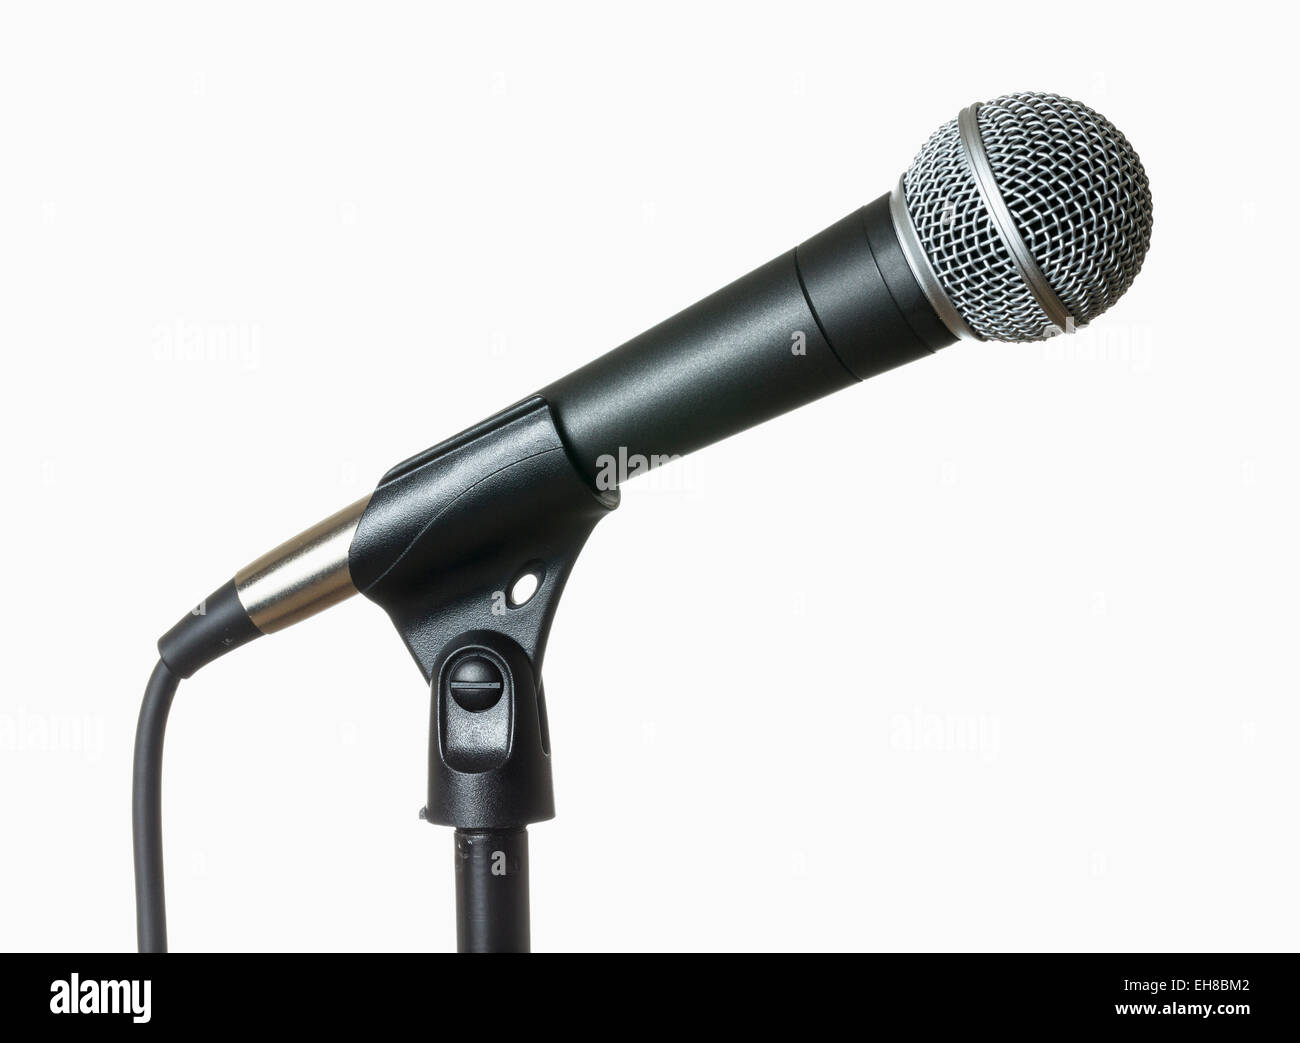 Etapa clásica en un soporte de micrófono con cable aislado contra un blanco Foto de stock